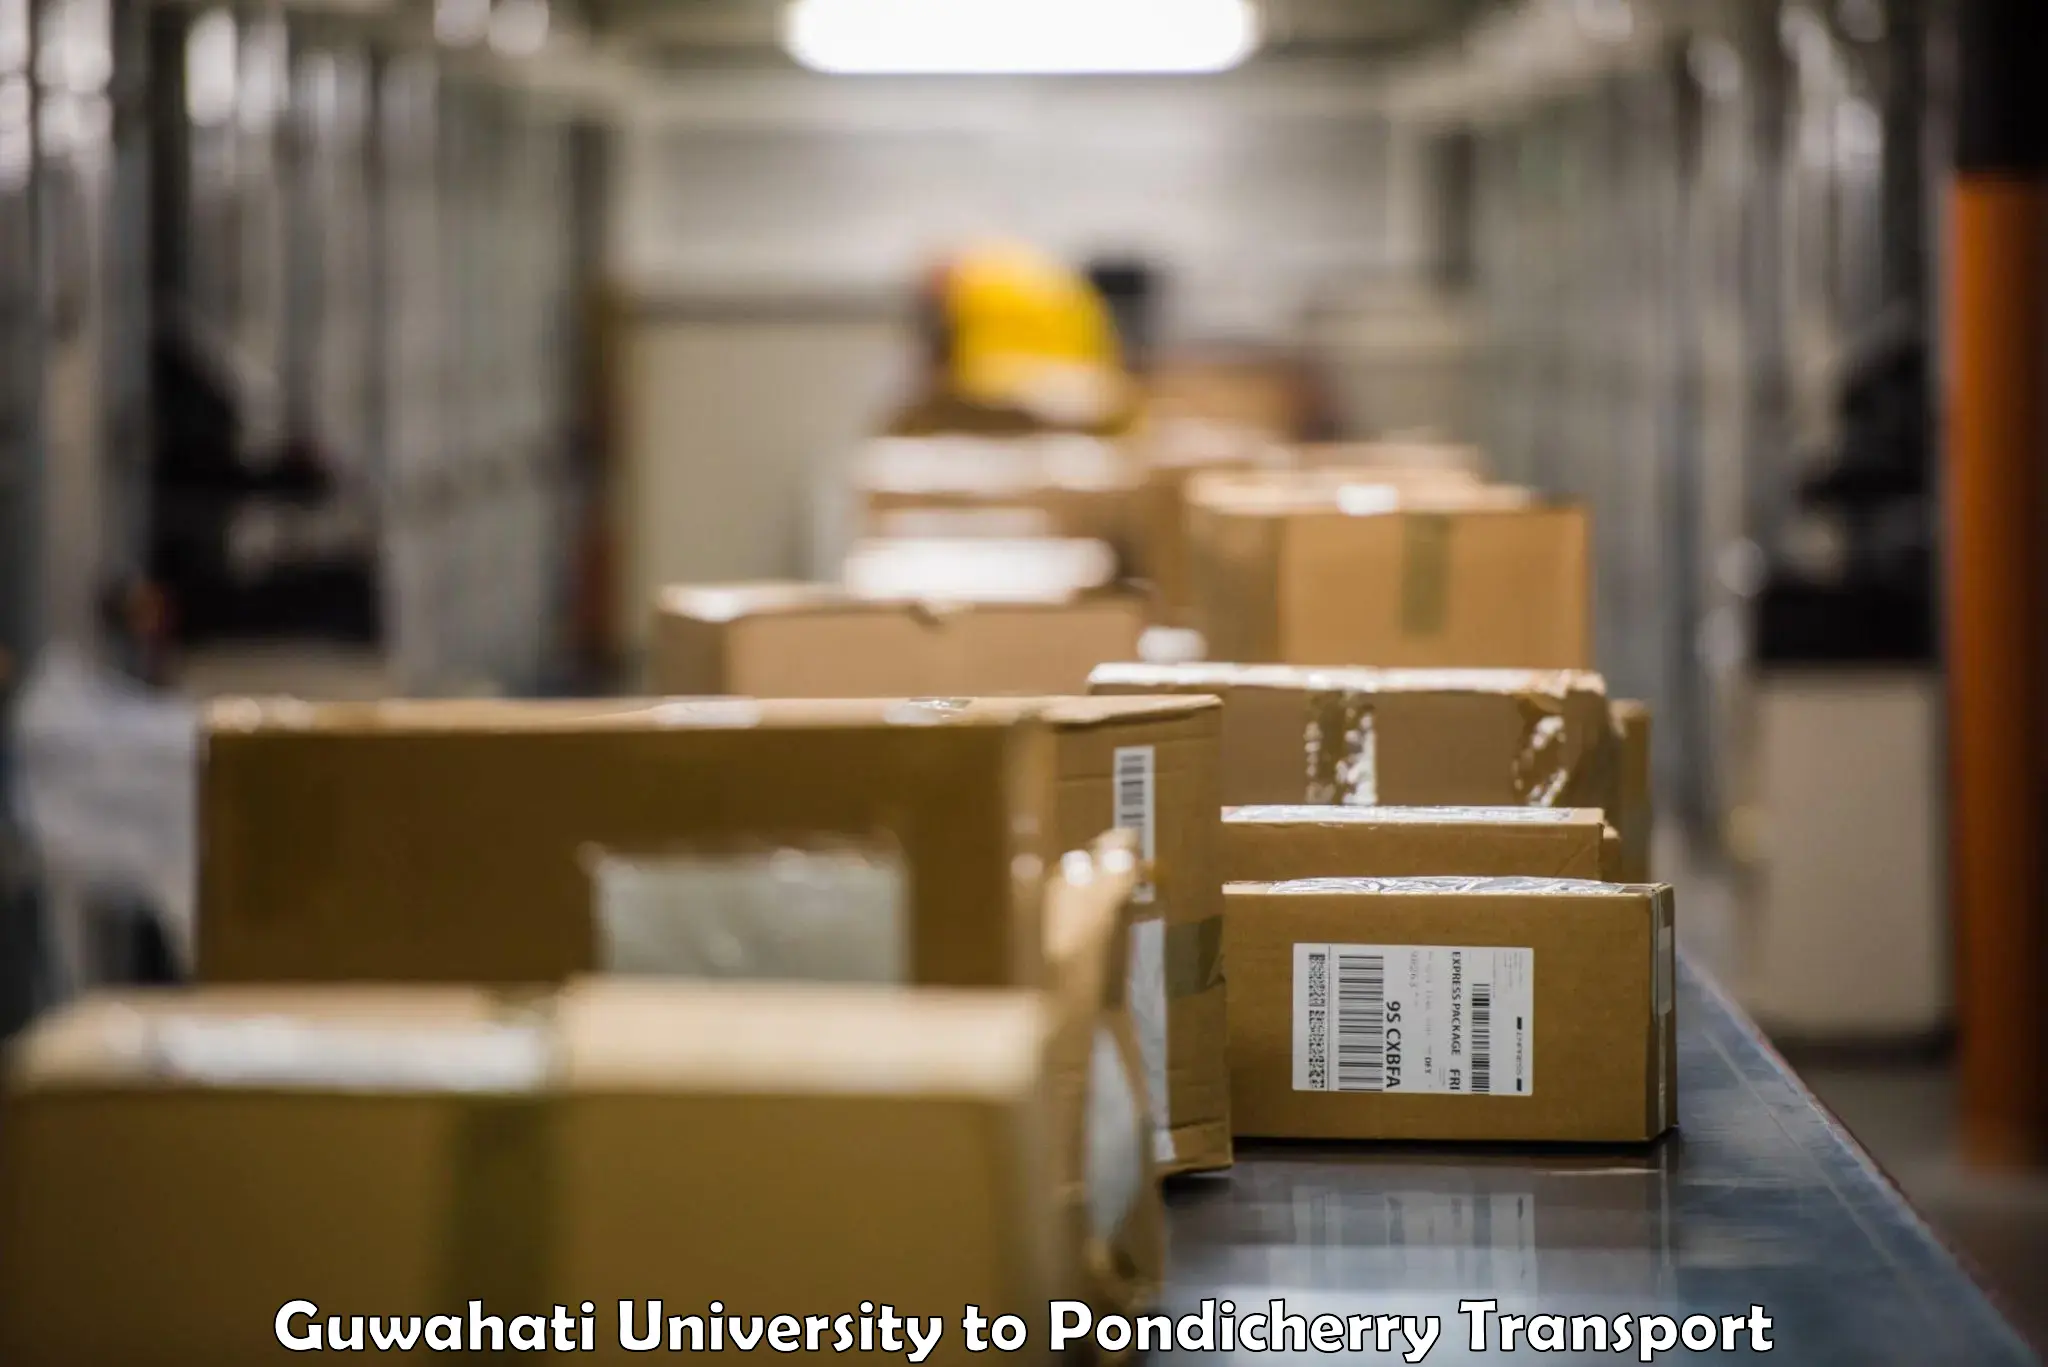 Furniture transport service Guwahati University to Pondicherry University